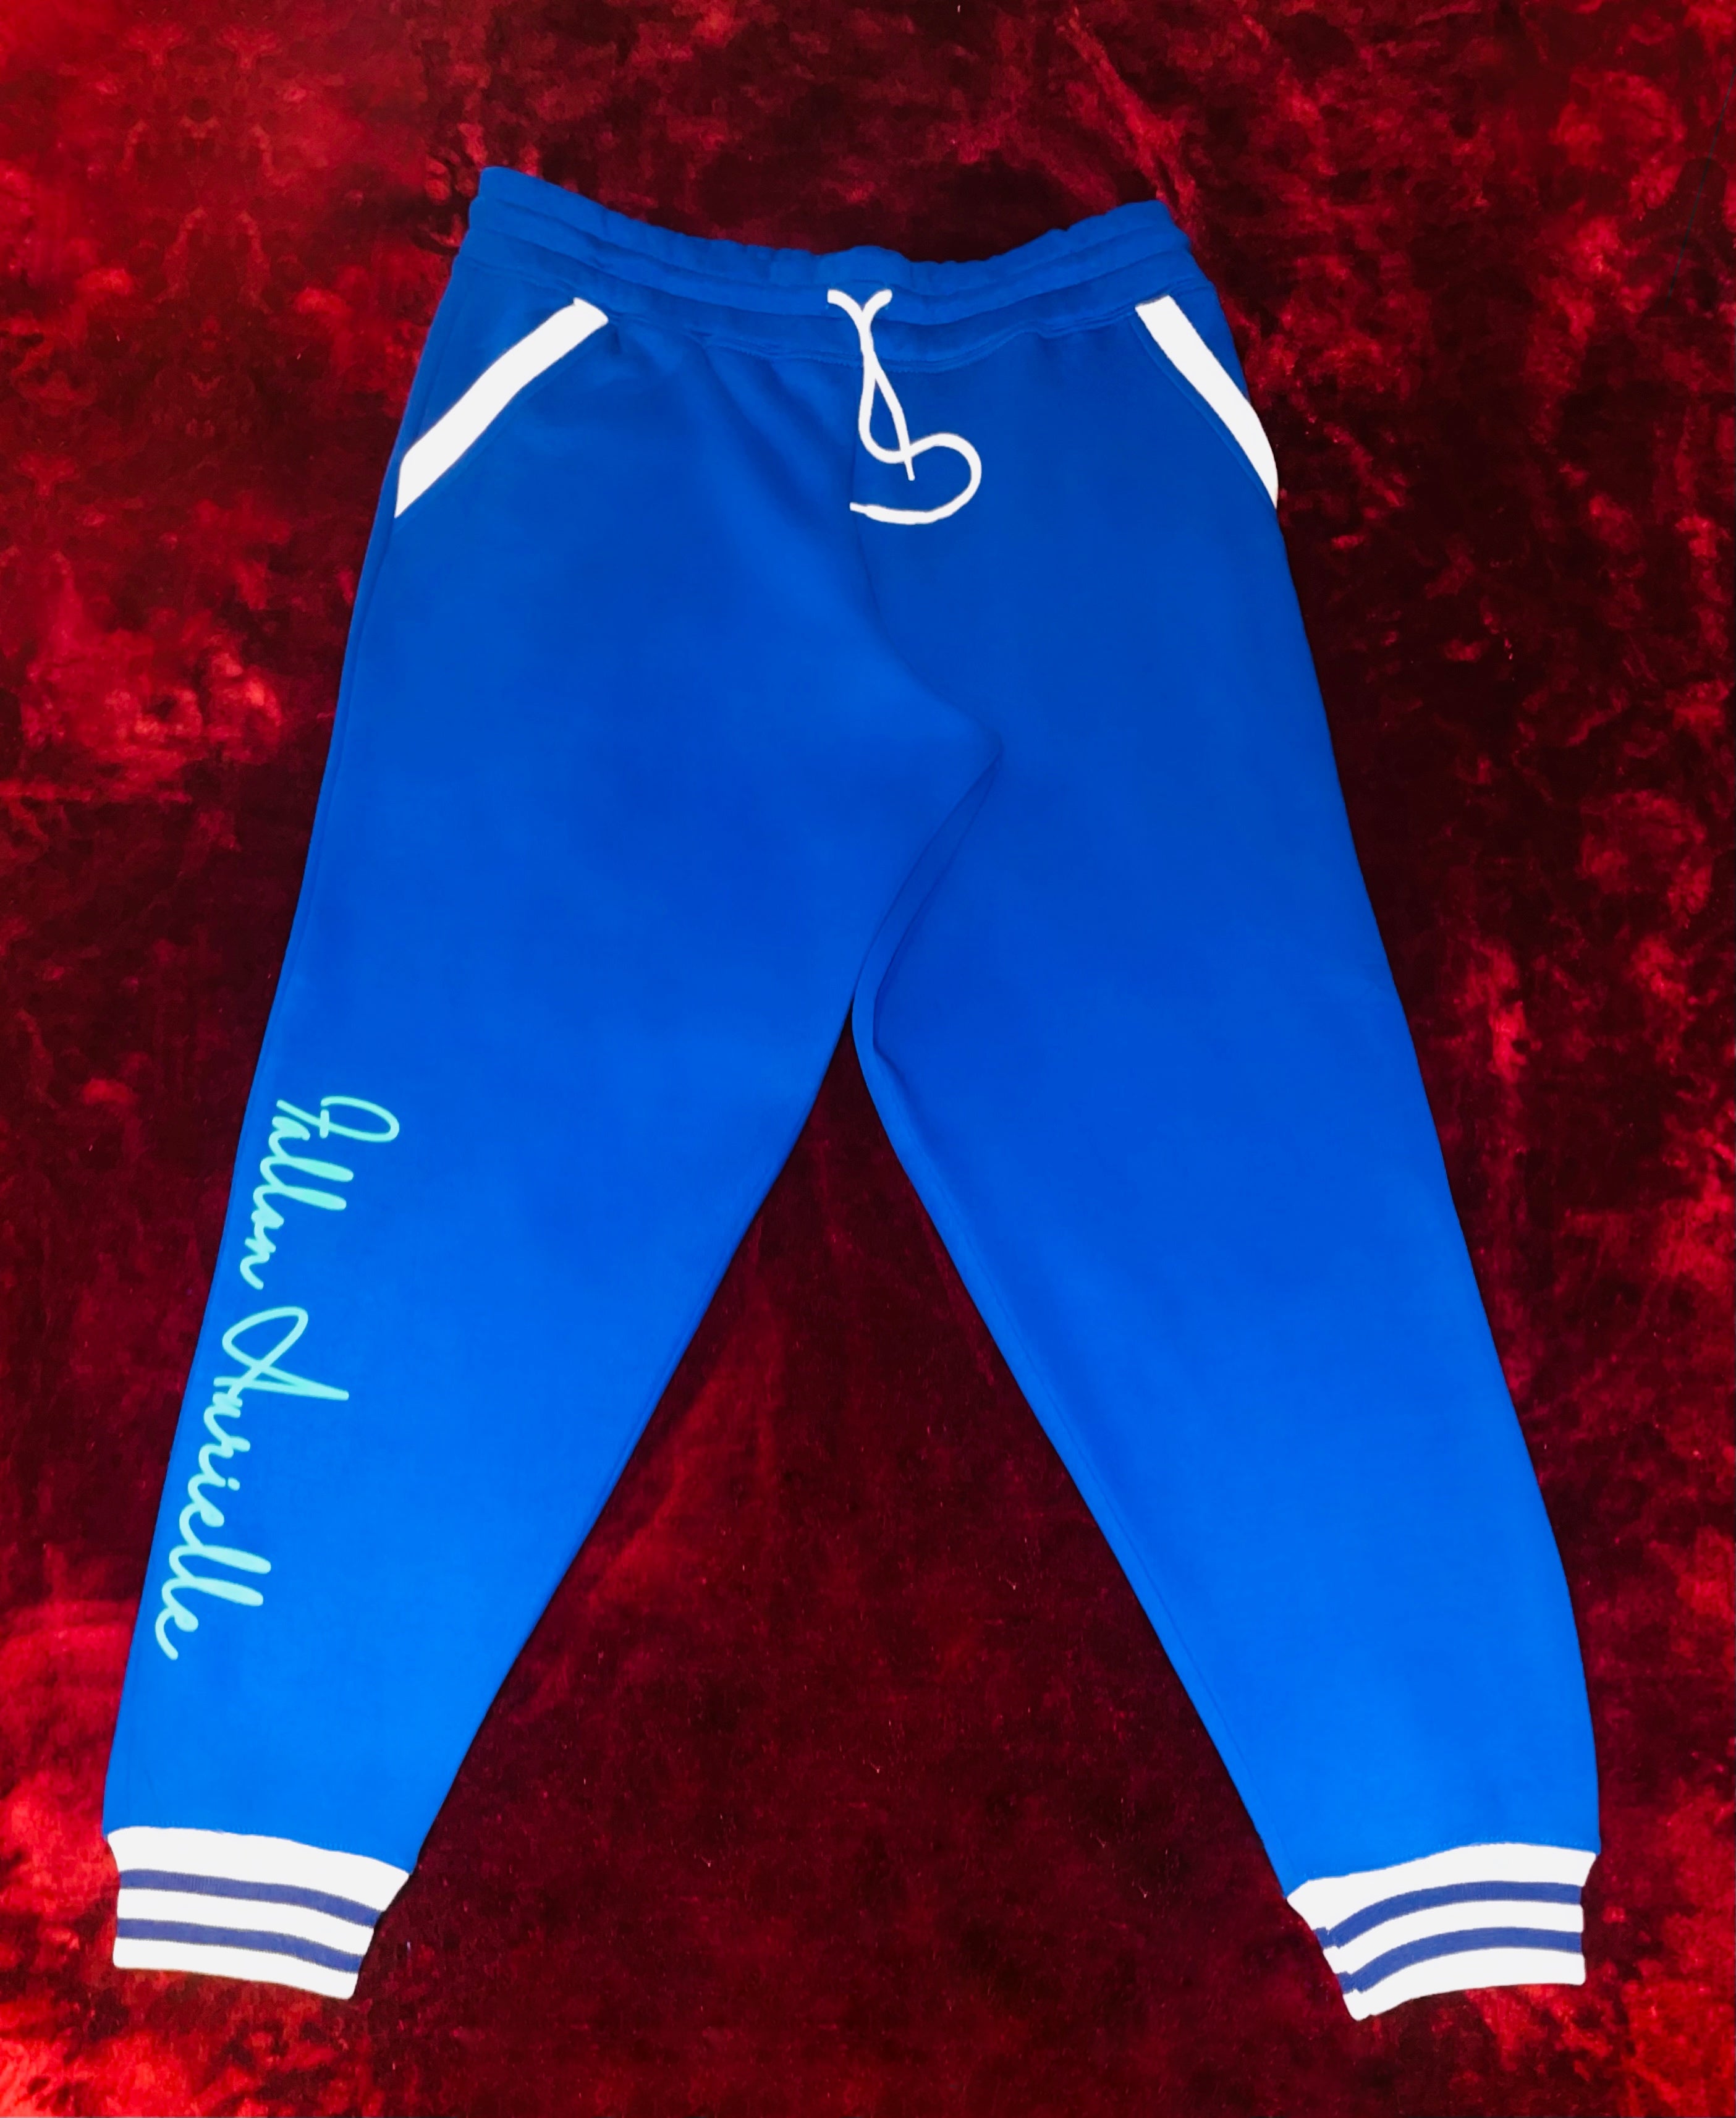 Fallon Aurielle Unisex Signature Taurus Zodiac Jacket Jogging Set (Royal Blue, White & Lime Green)